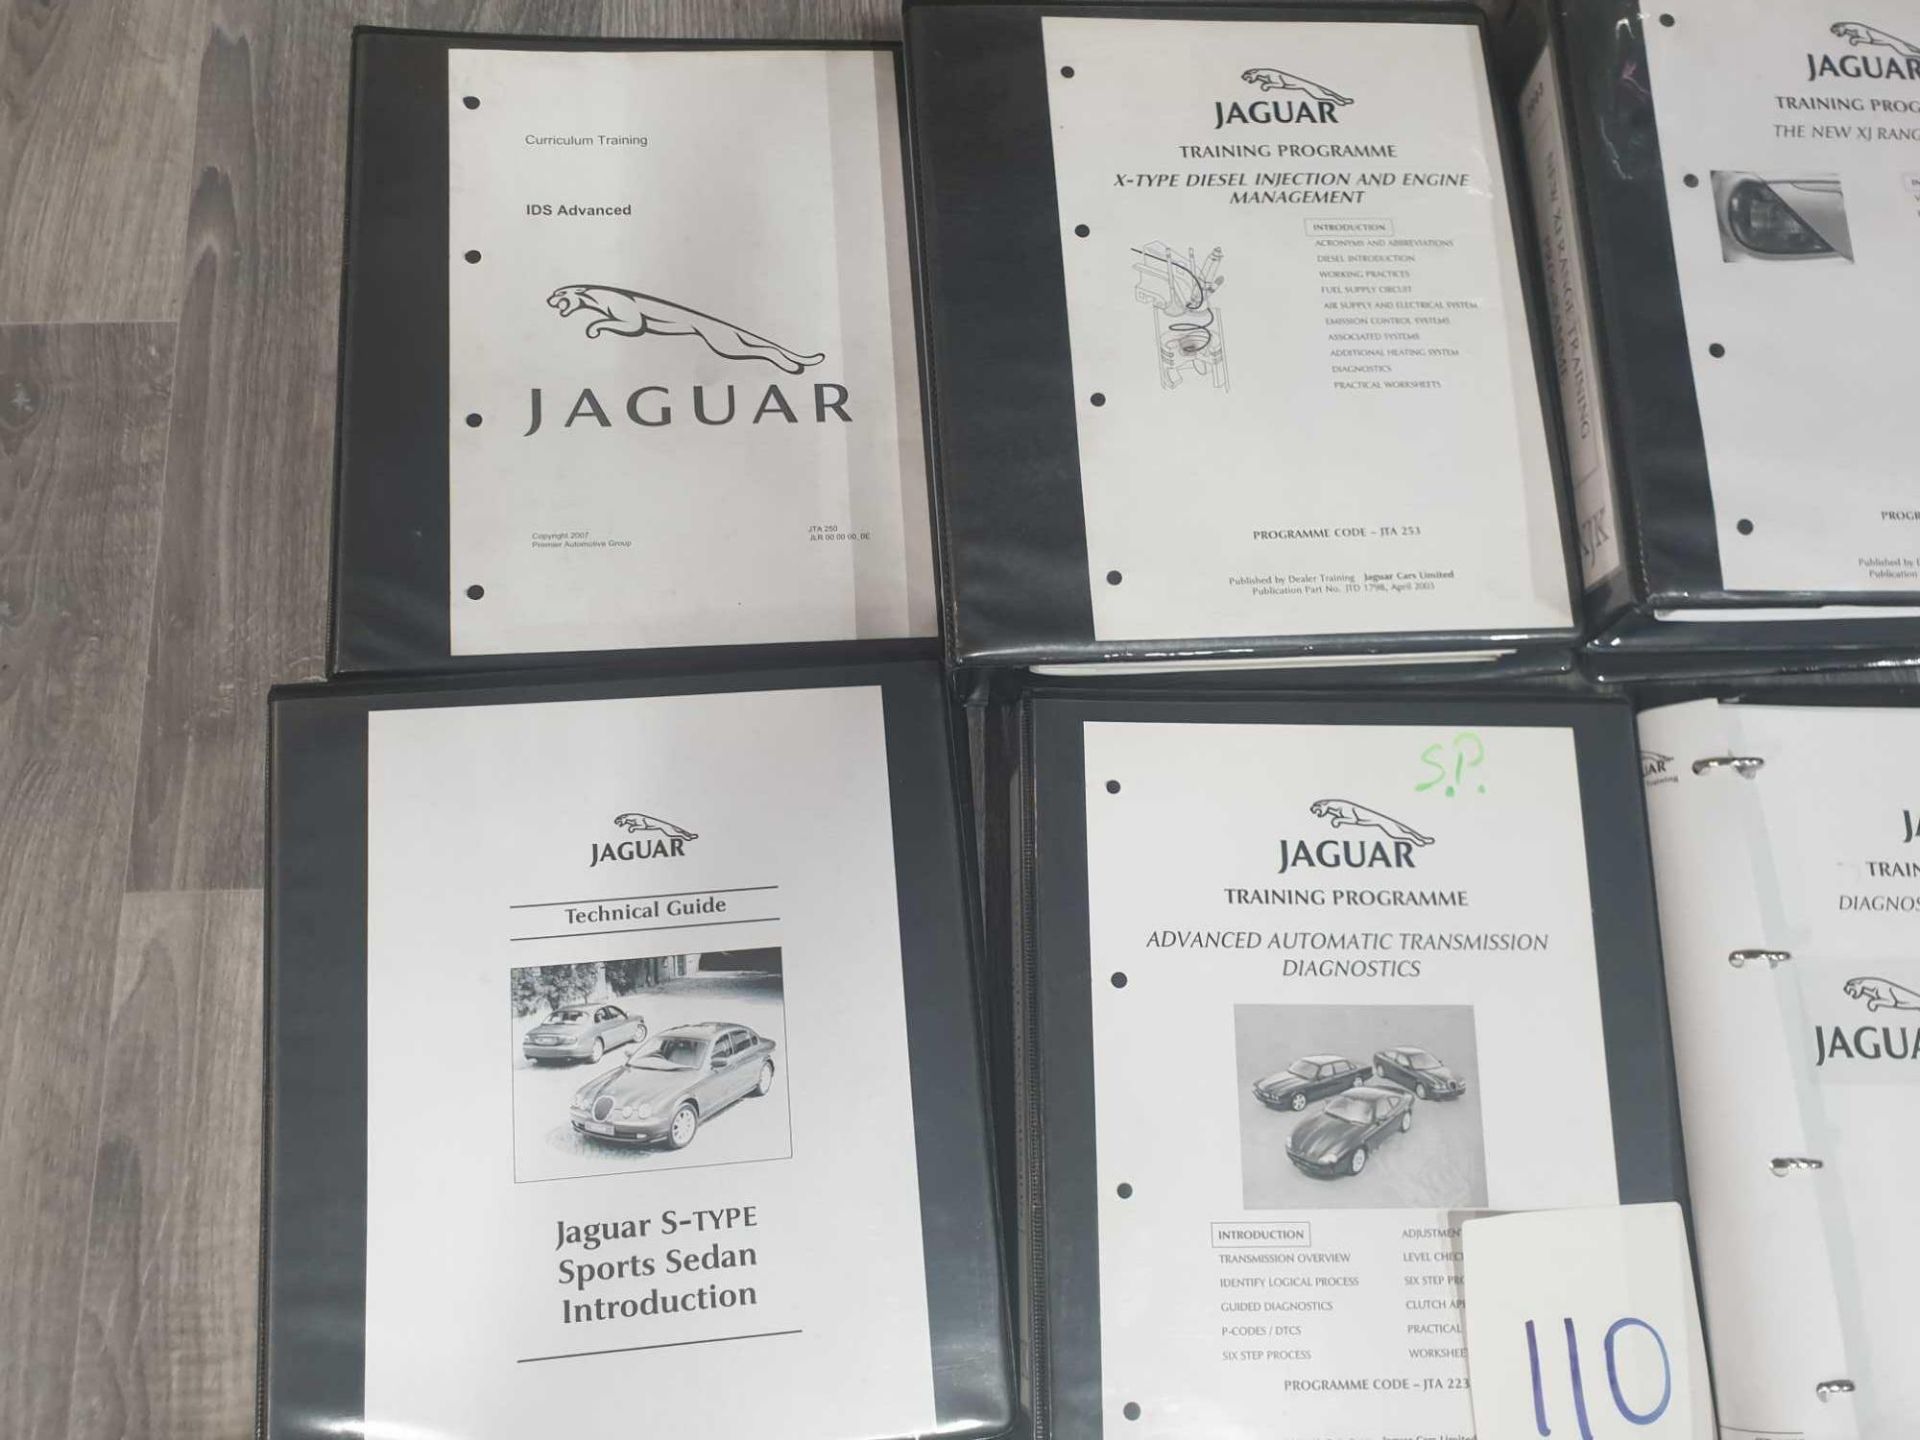 Jaguar dealer original training manuals data and advise covering most cores - Image 4 of 6